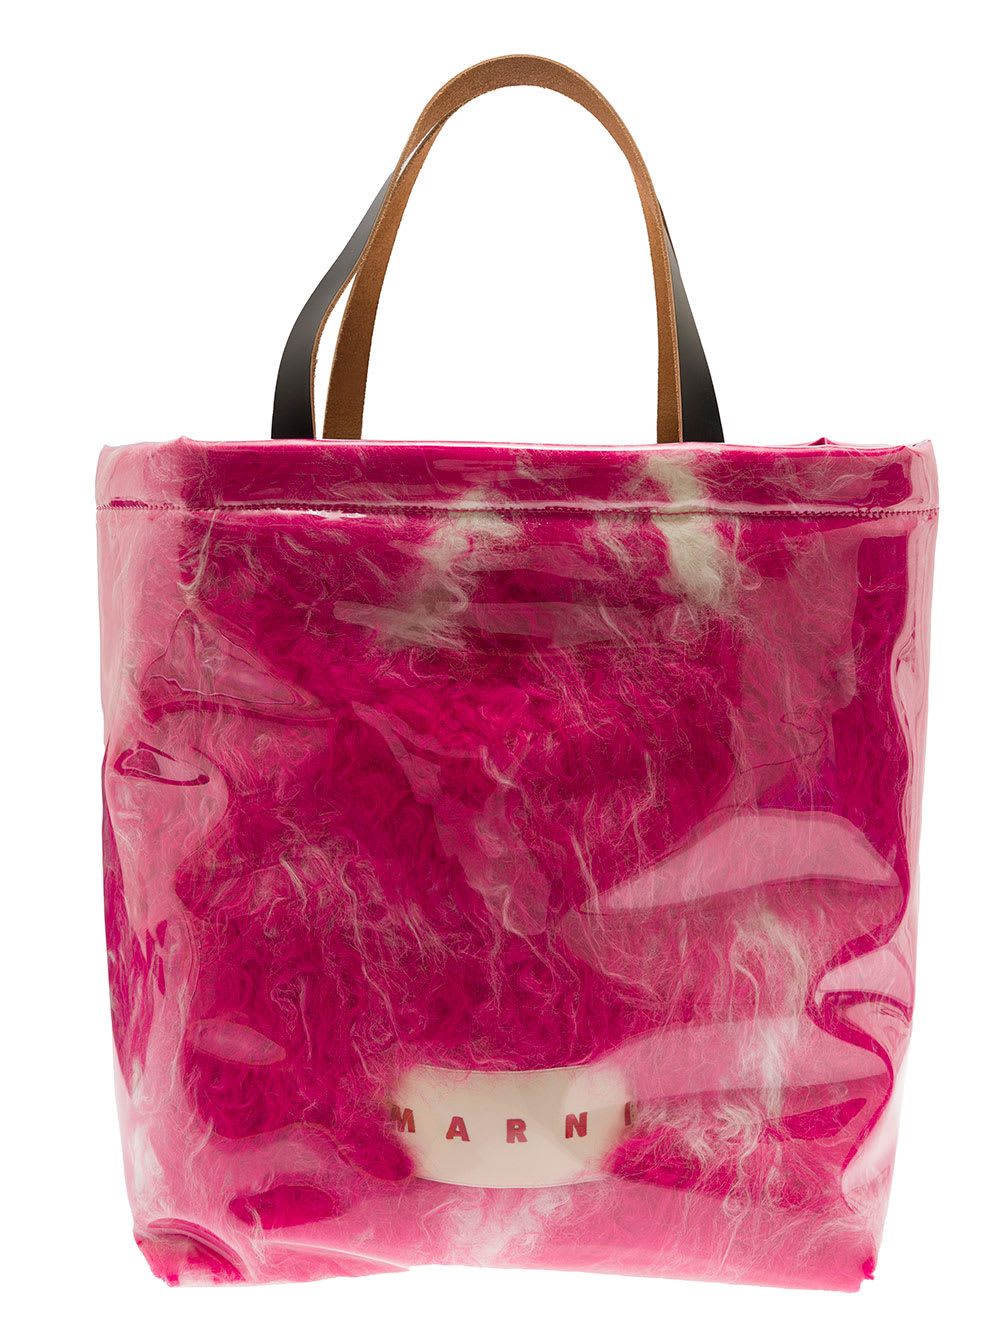 Marni Fuchsia Tote Bag With Plastic Covered Fur Embellishment Woman